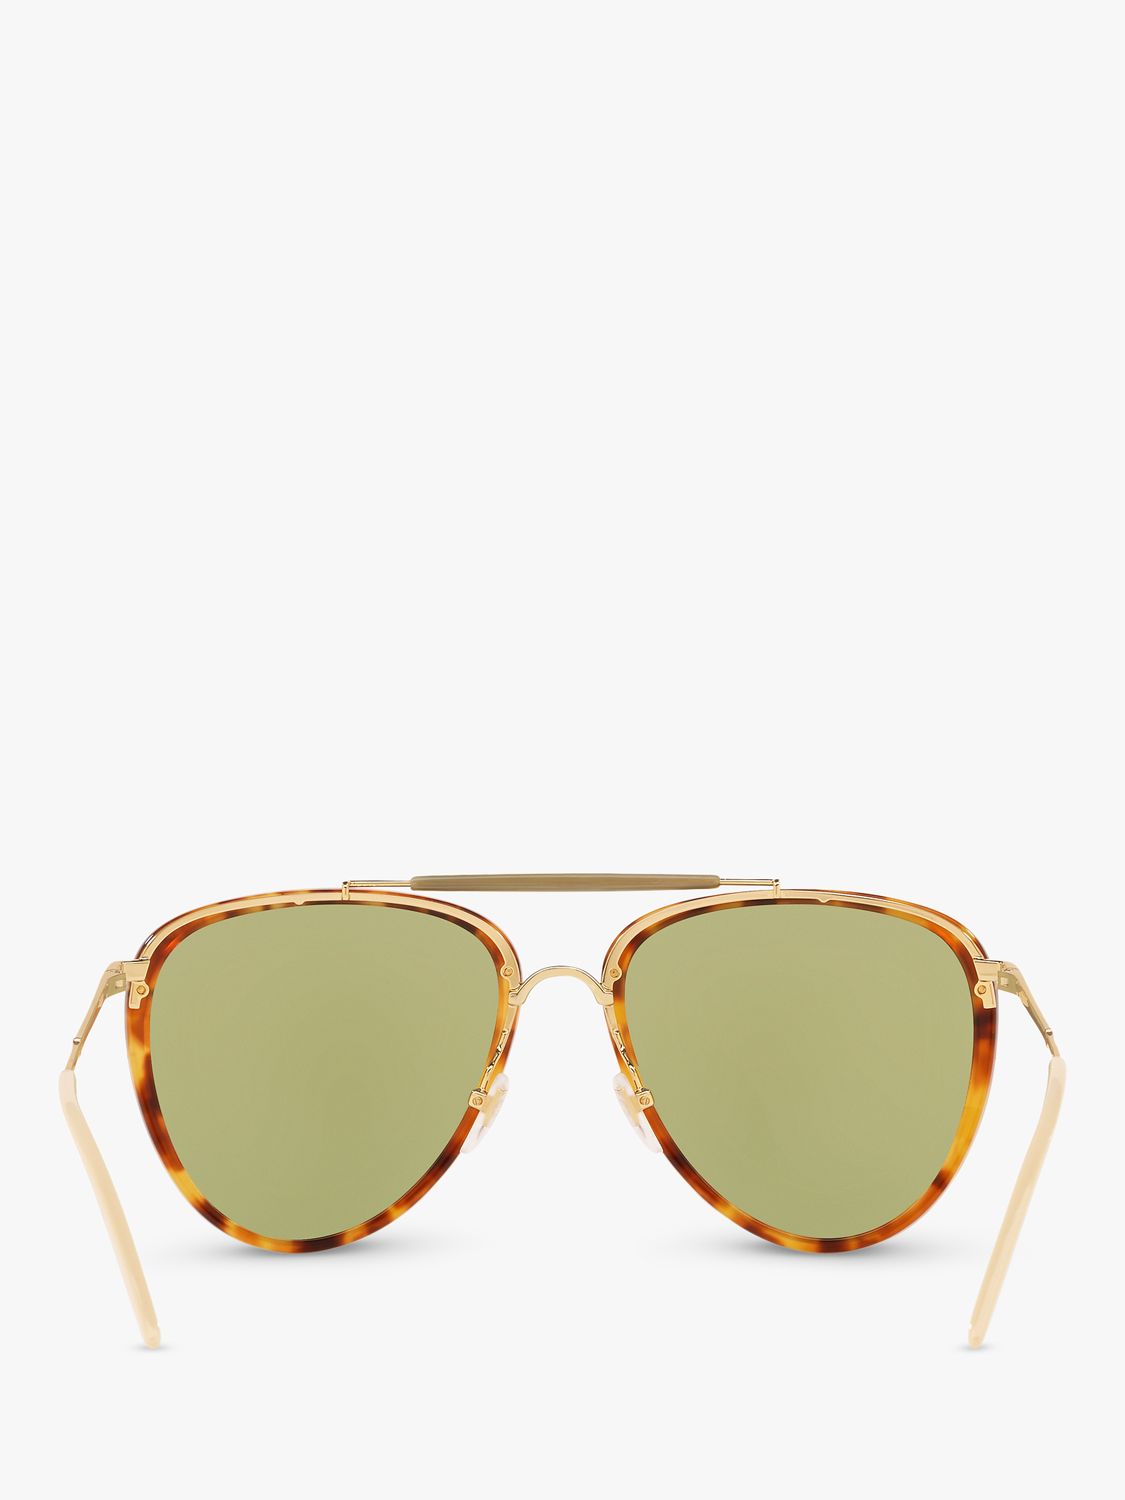 Gucci GG0672S Women's Aviator Sunglasses, Light Havana/Green at John ...